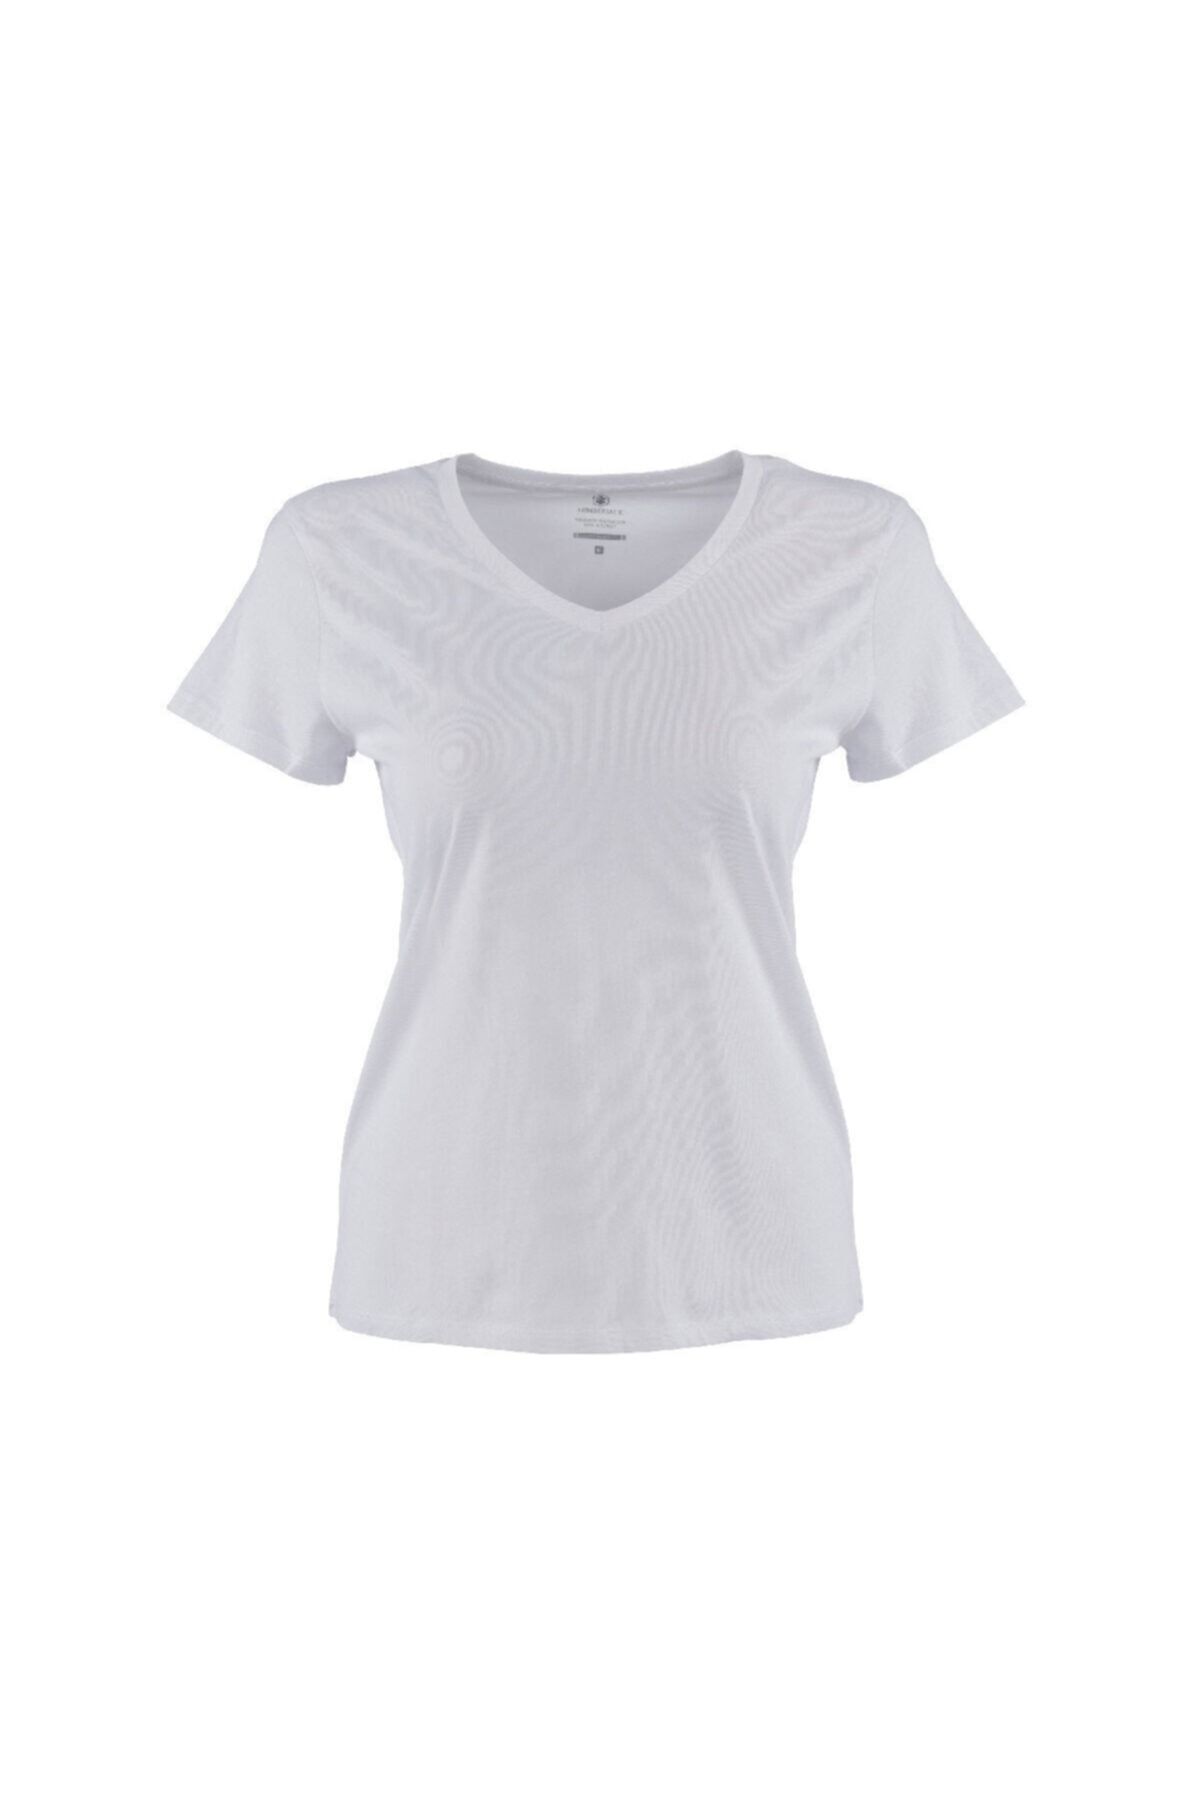 Lumberjack CT132 BASIC MODAL V NECK Beyaz Kadın T-Shirt 100581844